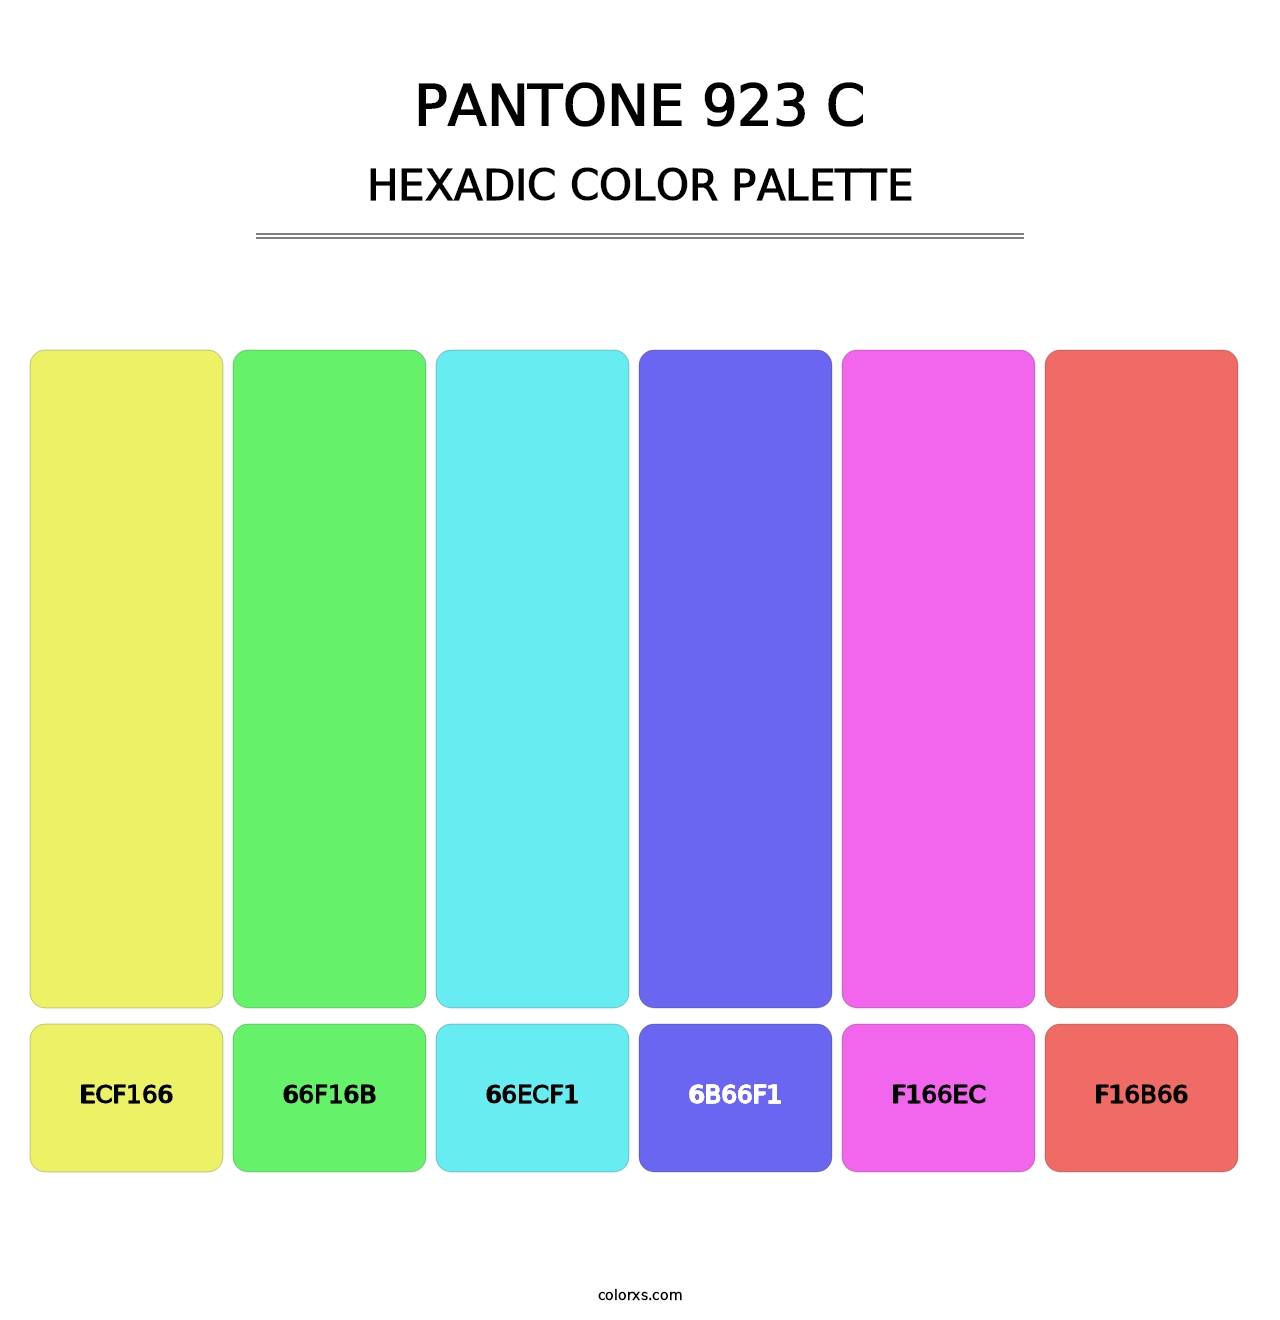 PANTONE 923 C - Hexadic Color Palette